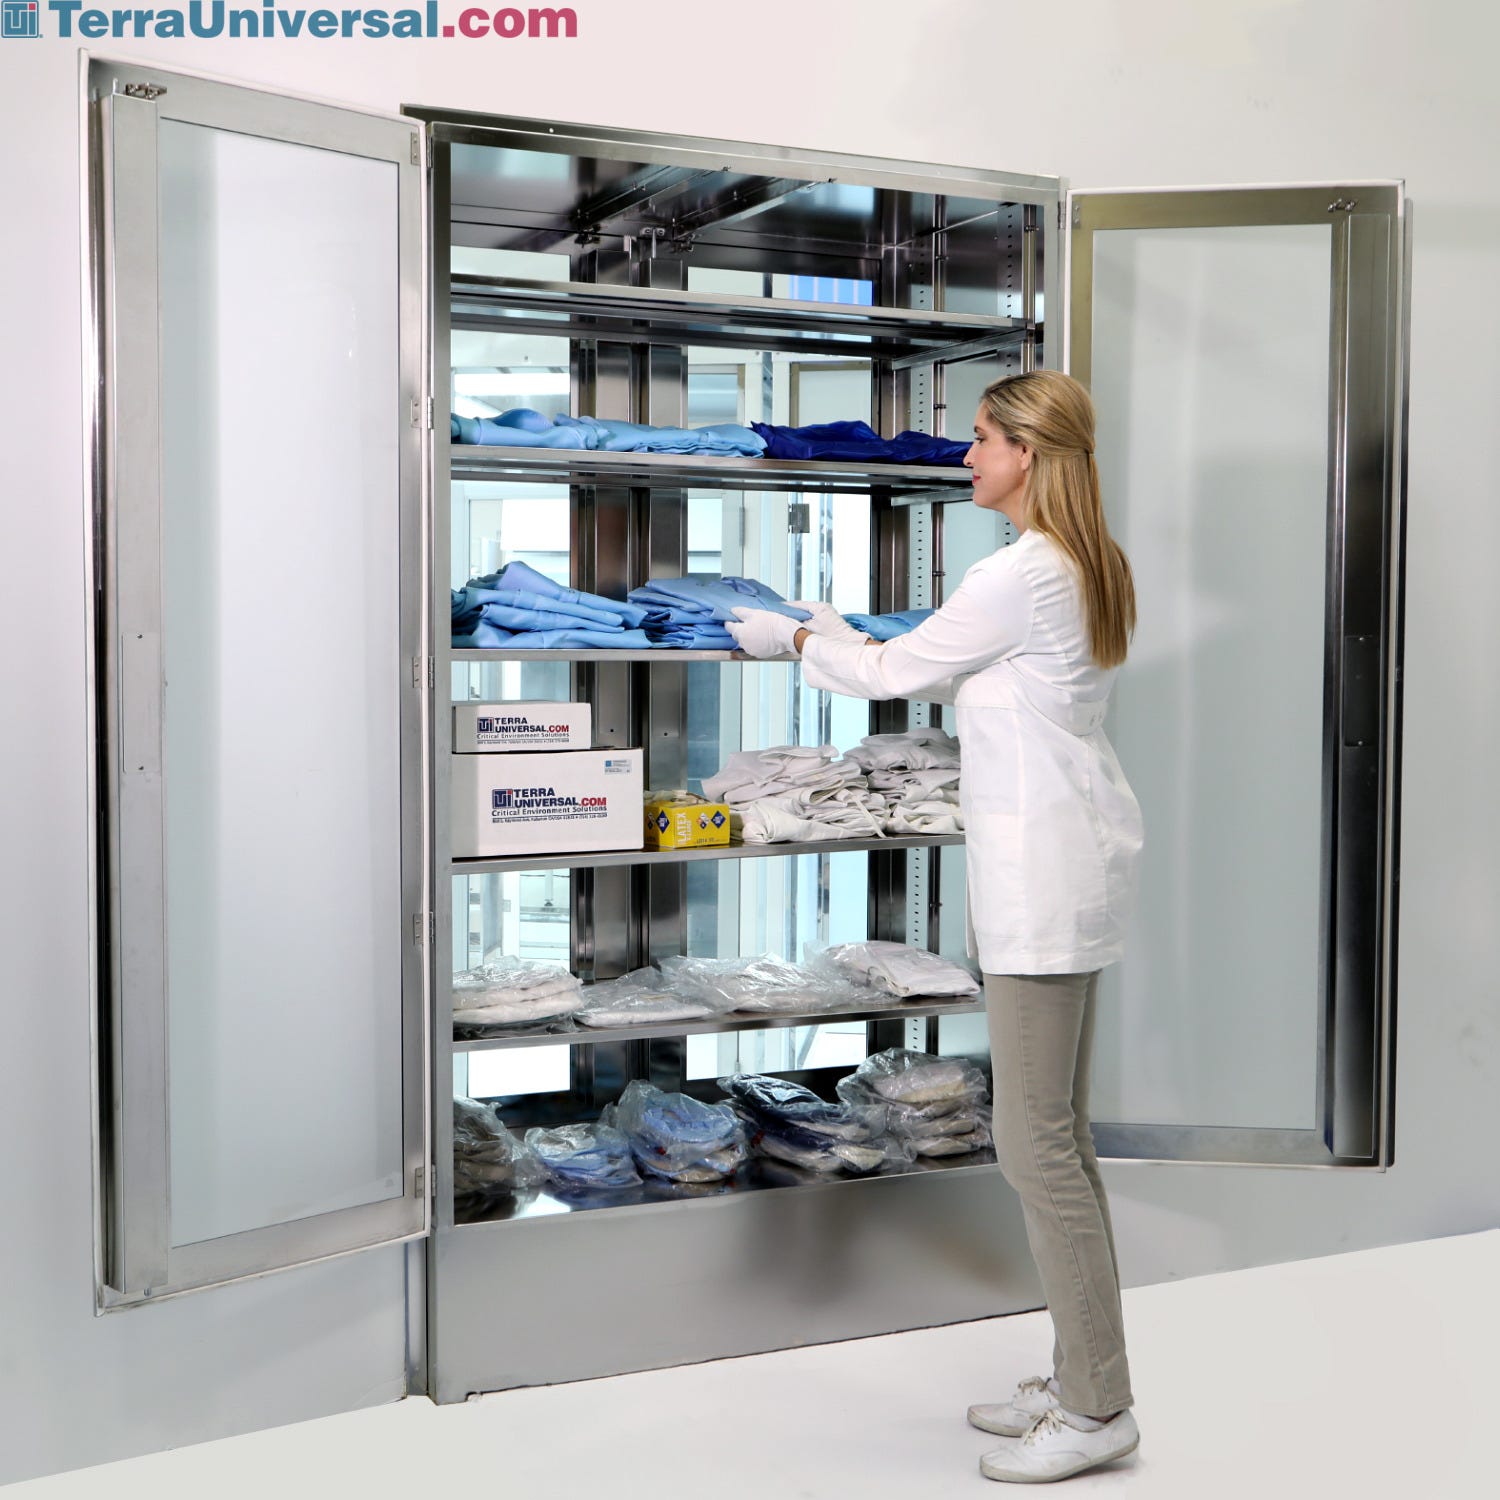 Medical Supply Locking Cabinet, Shelves with Storage Bins